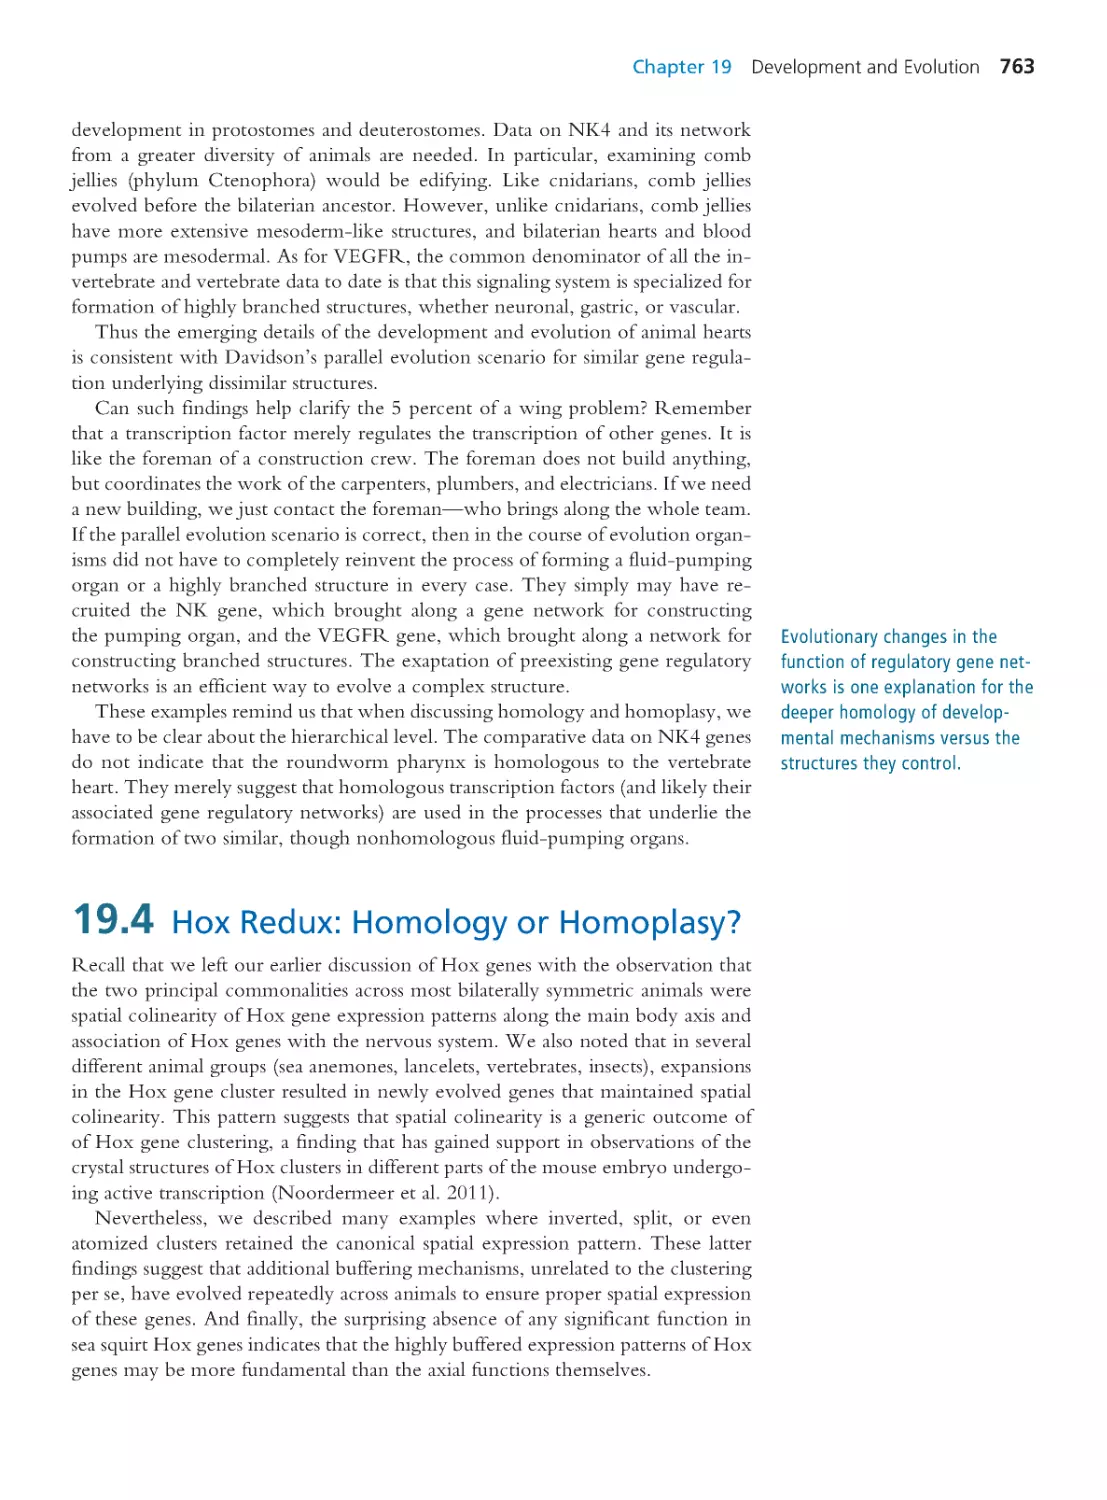 19.4 Hox Redux: Homology or Homoplasy?